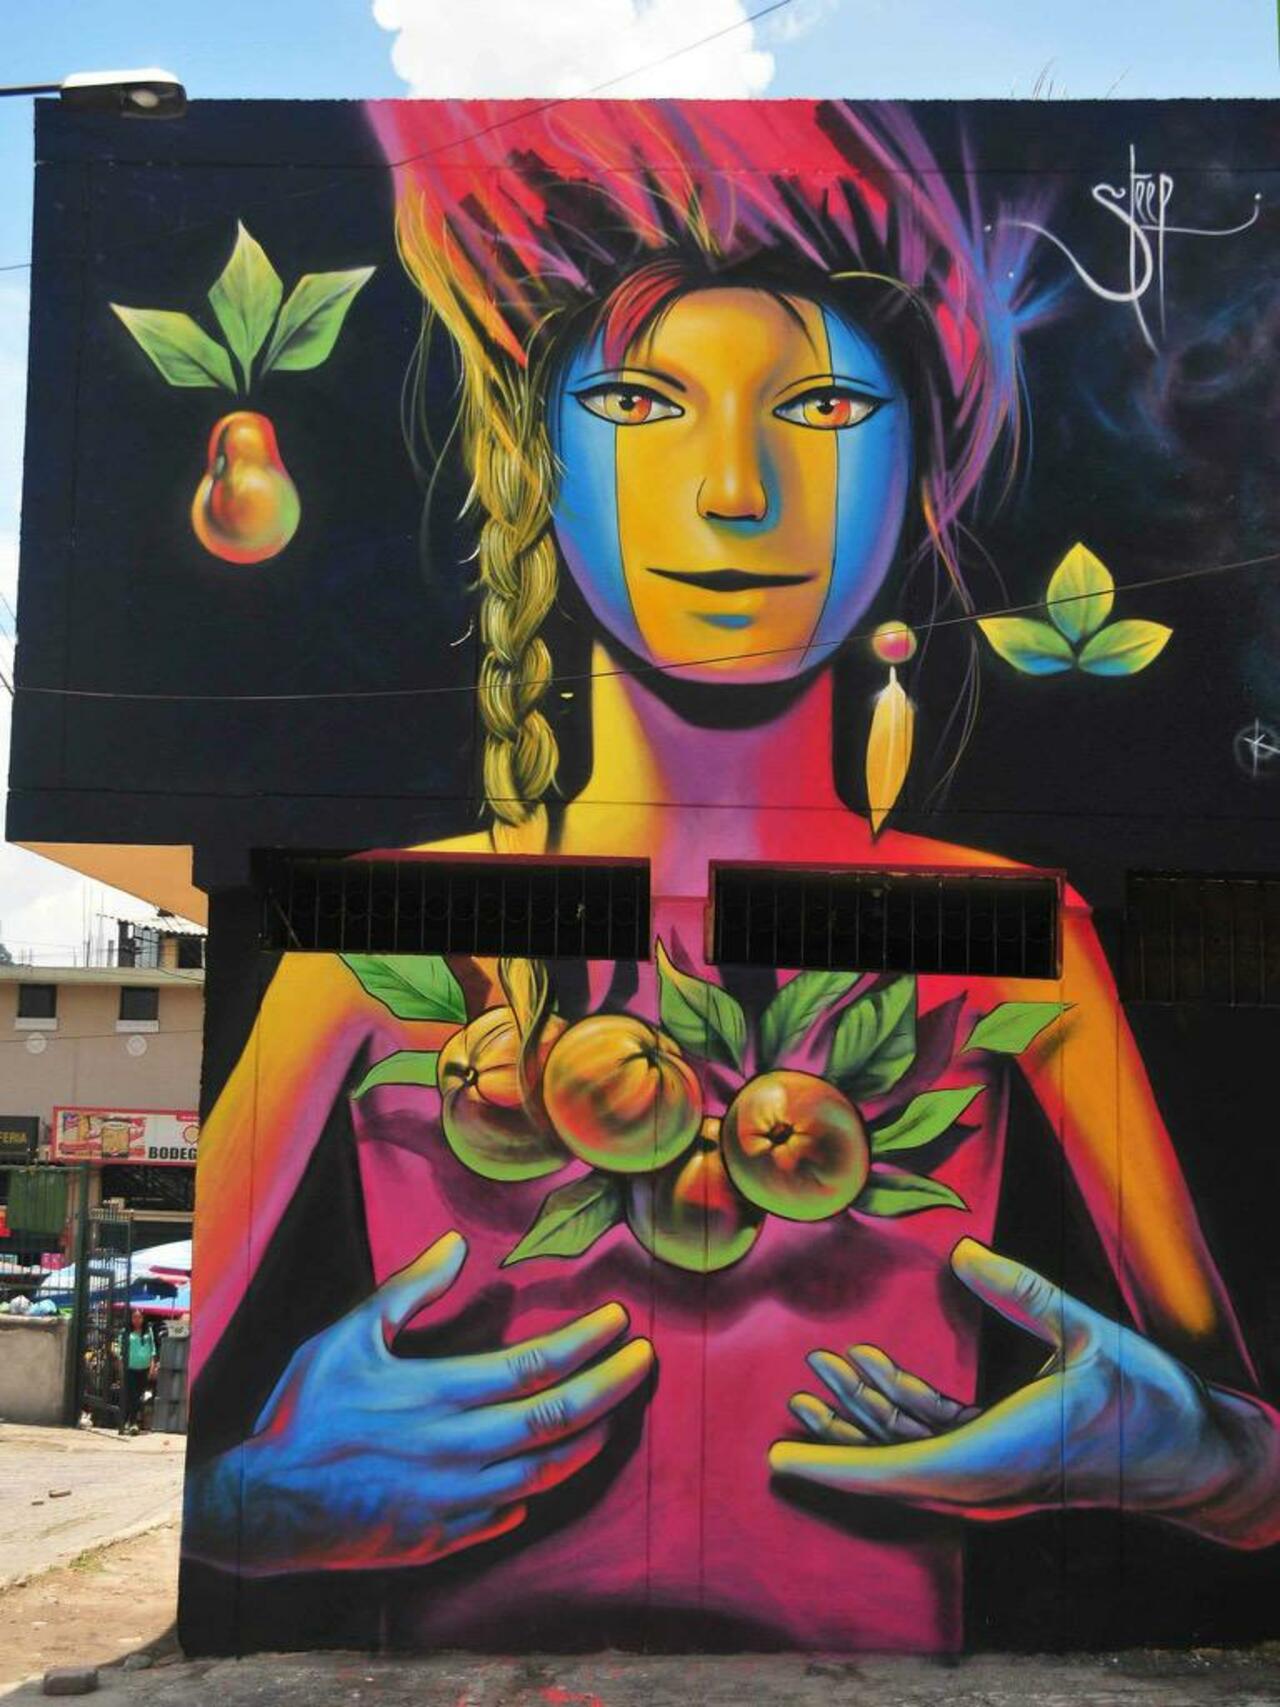 Street Art by Steep

#art #graffiti #mural #streetart http://t.co/hNYD7mbh31